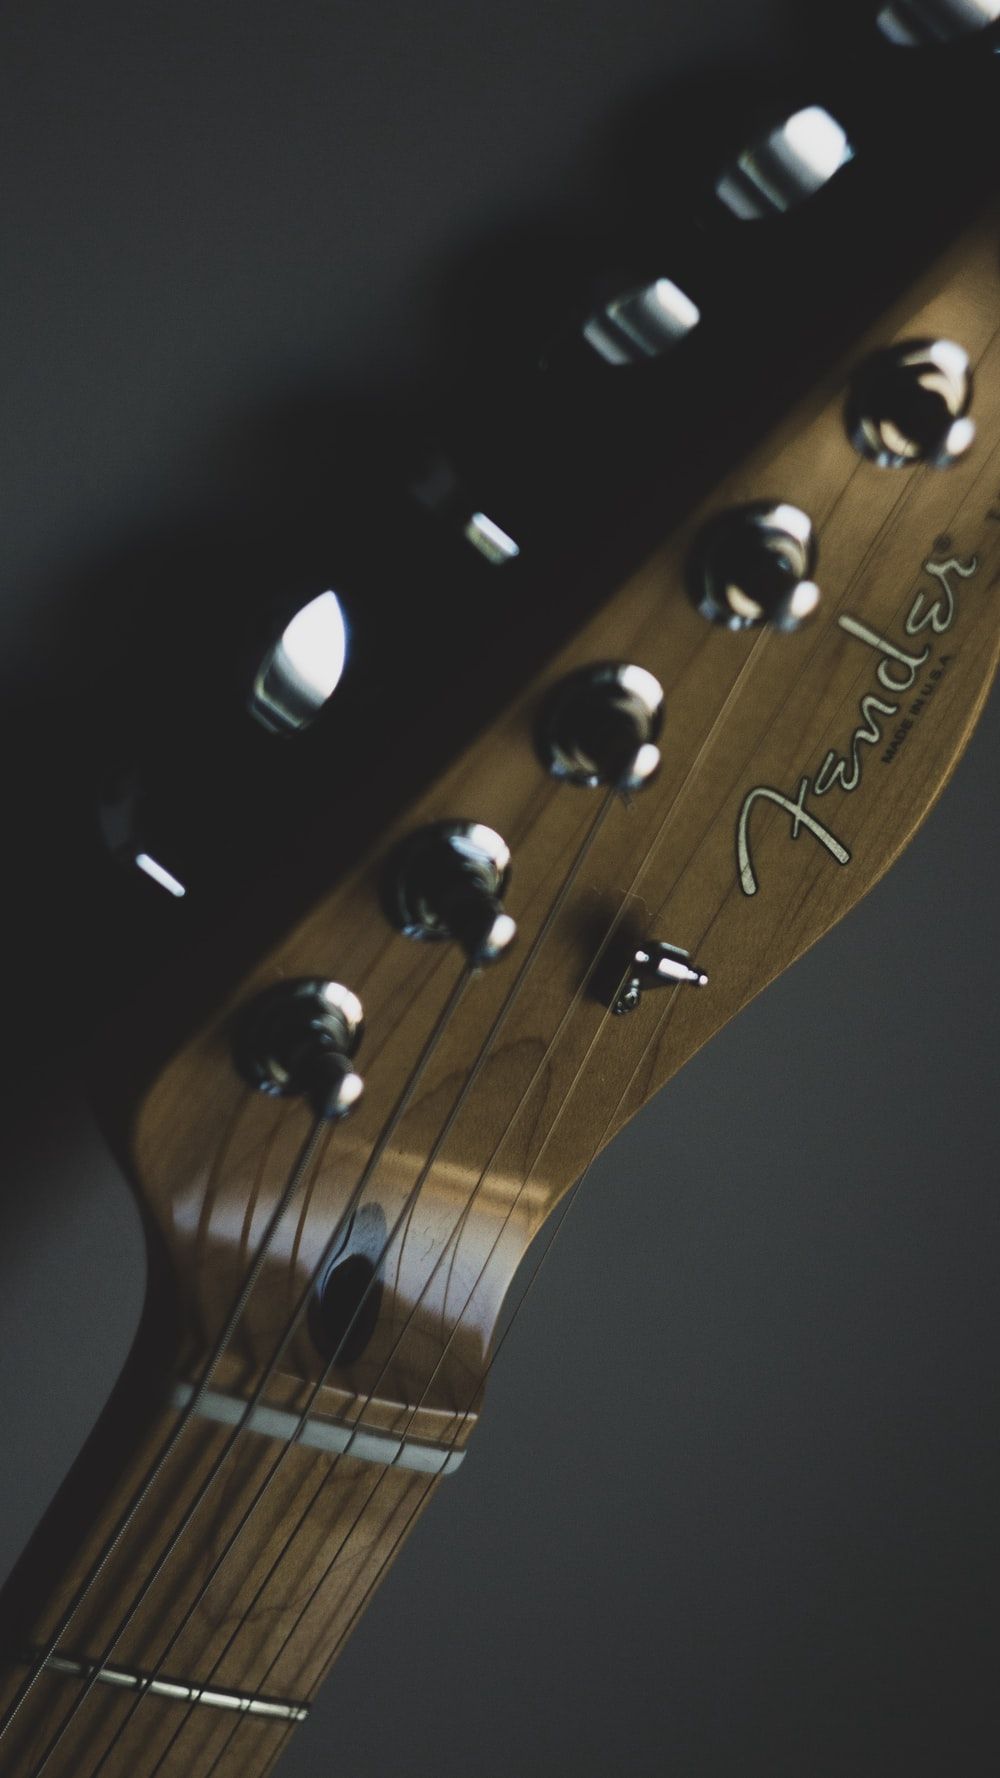 Fender Guitar Phone Wallpapers 4k Hd Fender Guitar Phone Backgrounds On Wallpaperbat